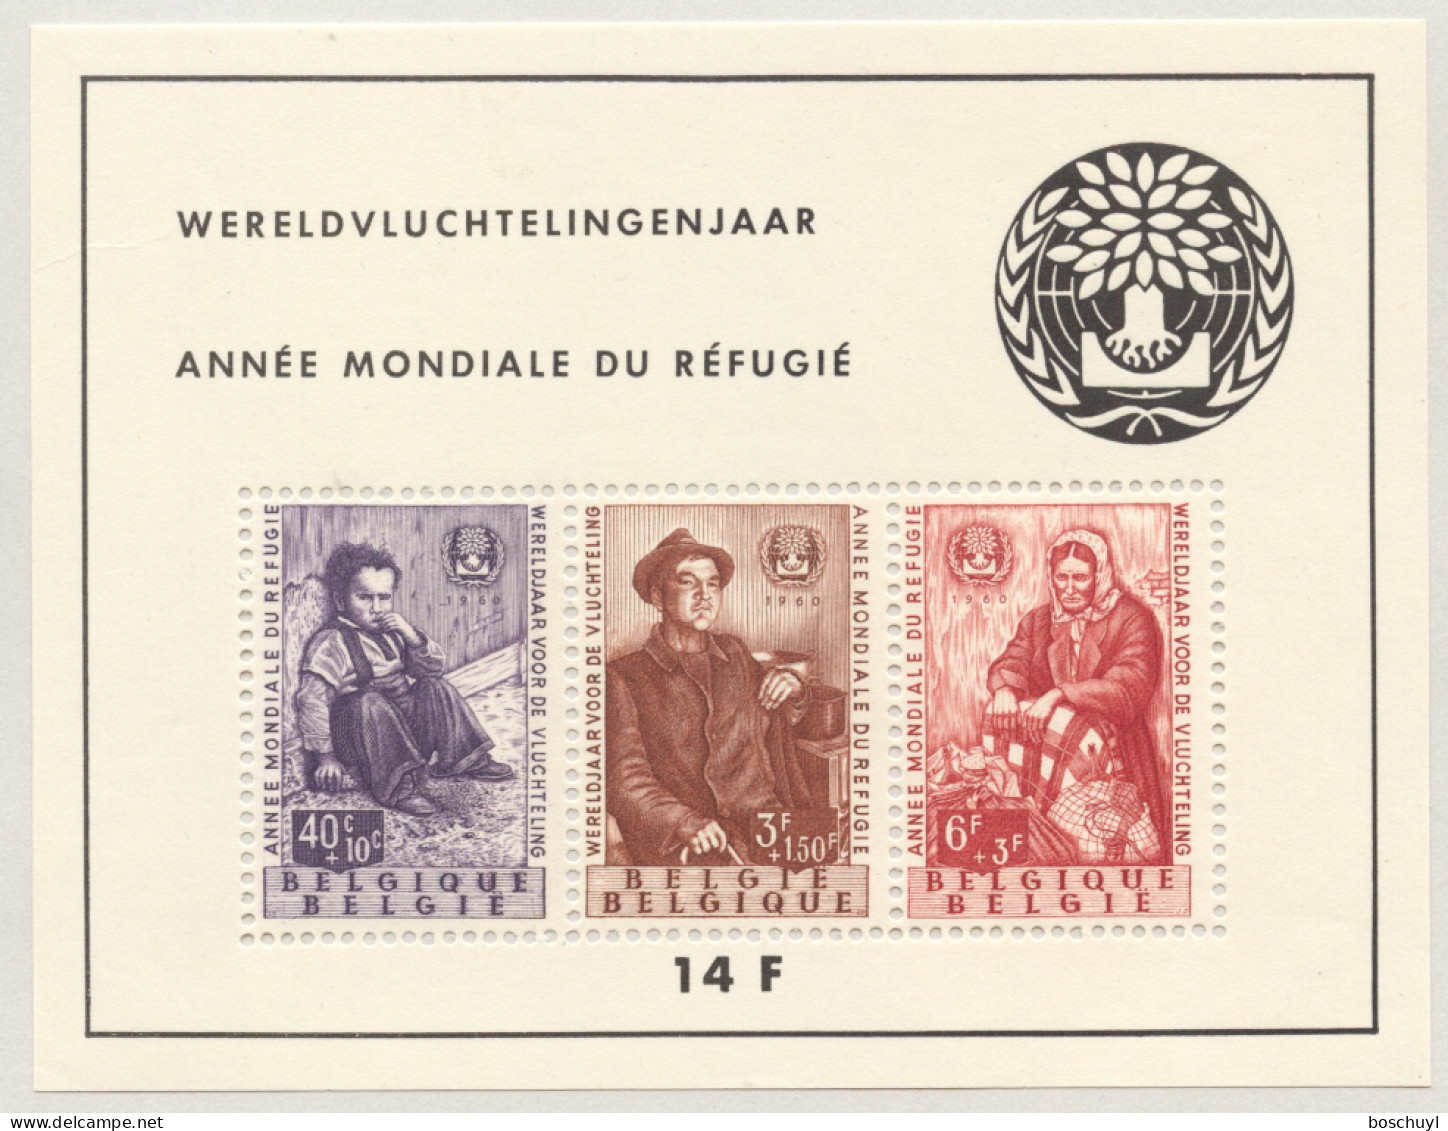 Belgium, 1960, World Refugee Year, WRY, United Nations, MNH, Michel Block 26 - Réfugiés